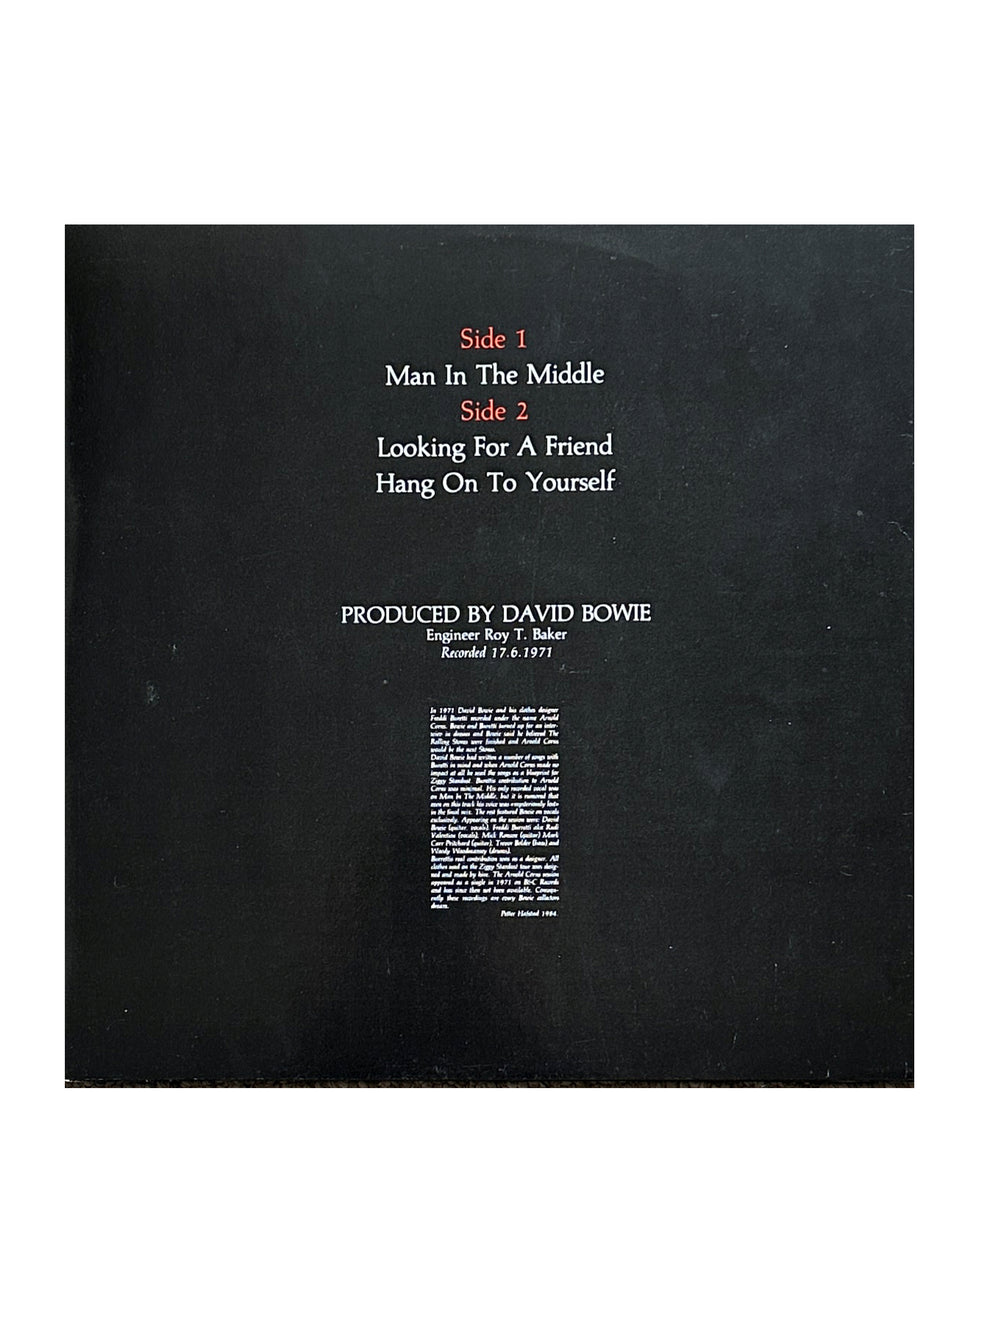 David Bowie - Arnold Corns  Man In The Middle 12" Vinyl UK  Preloved:1985